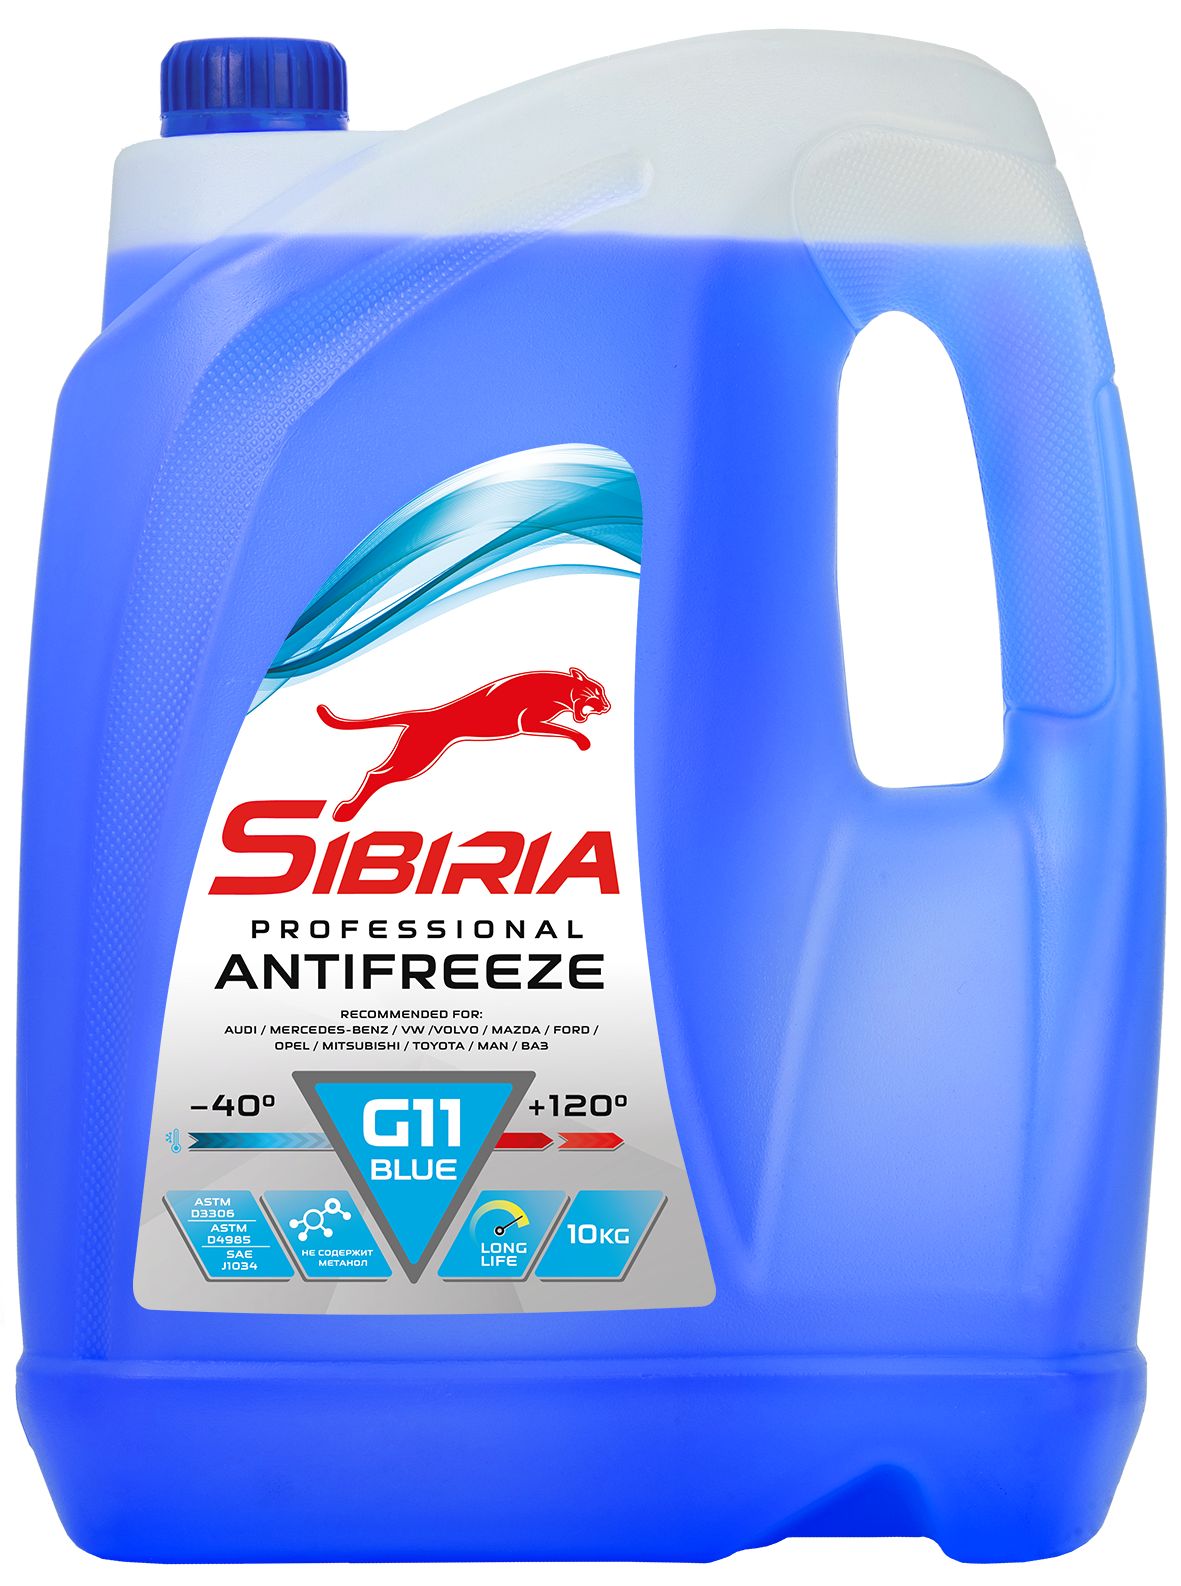 фото Антифриз sibiria antifreeze-40, g11, синий, -40, 10кг 745859